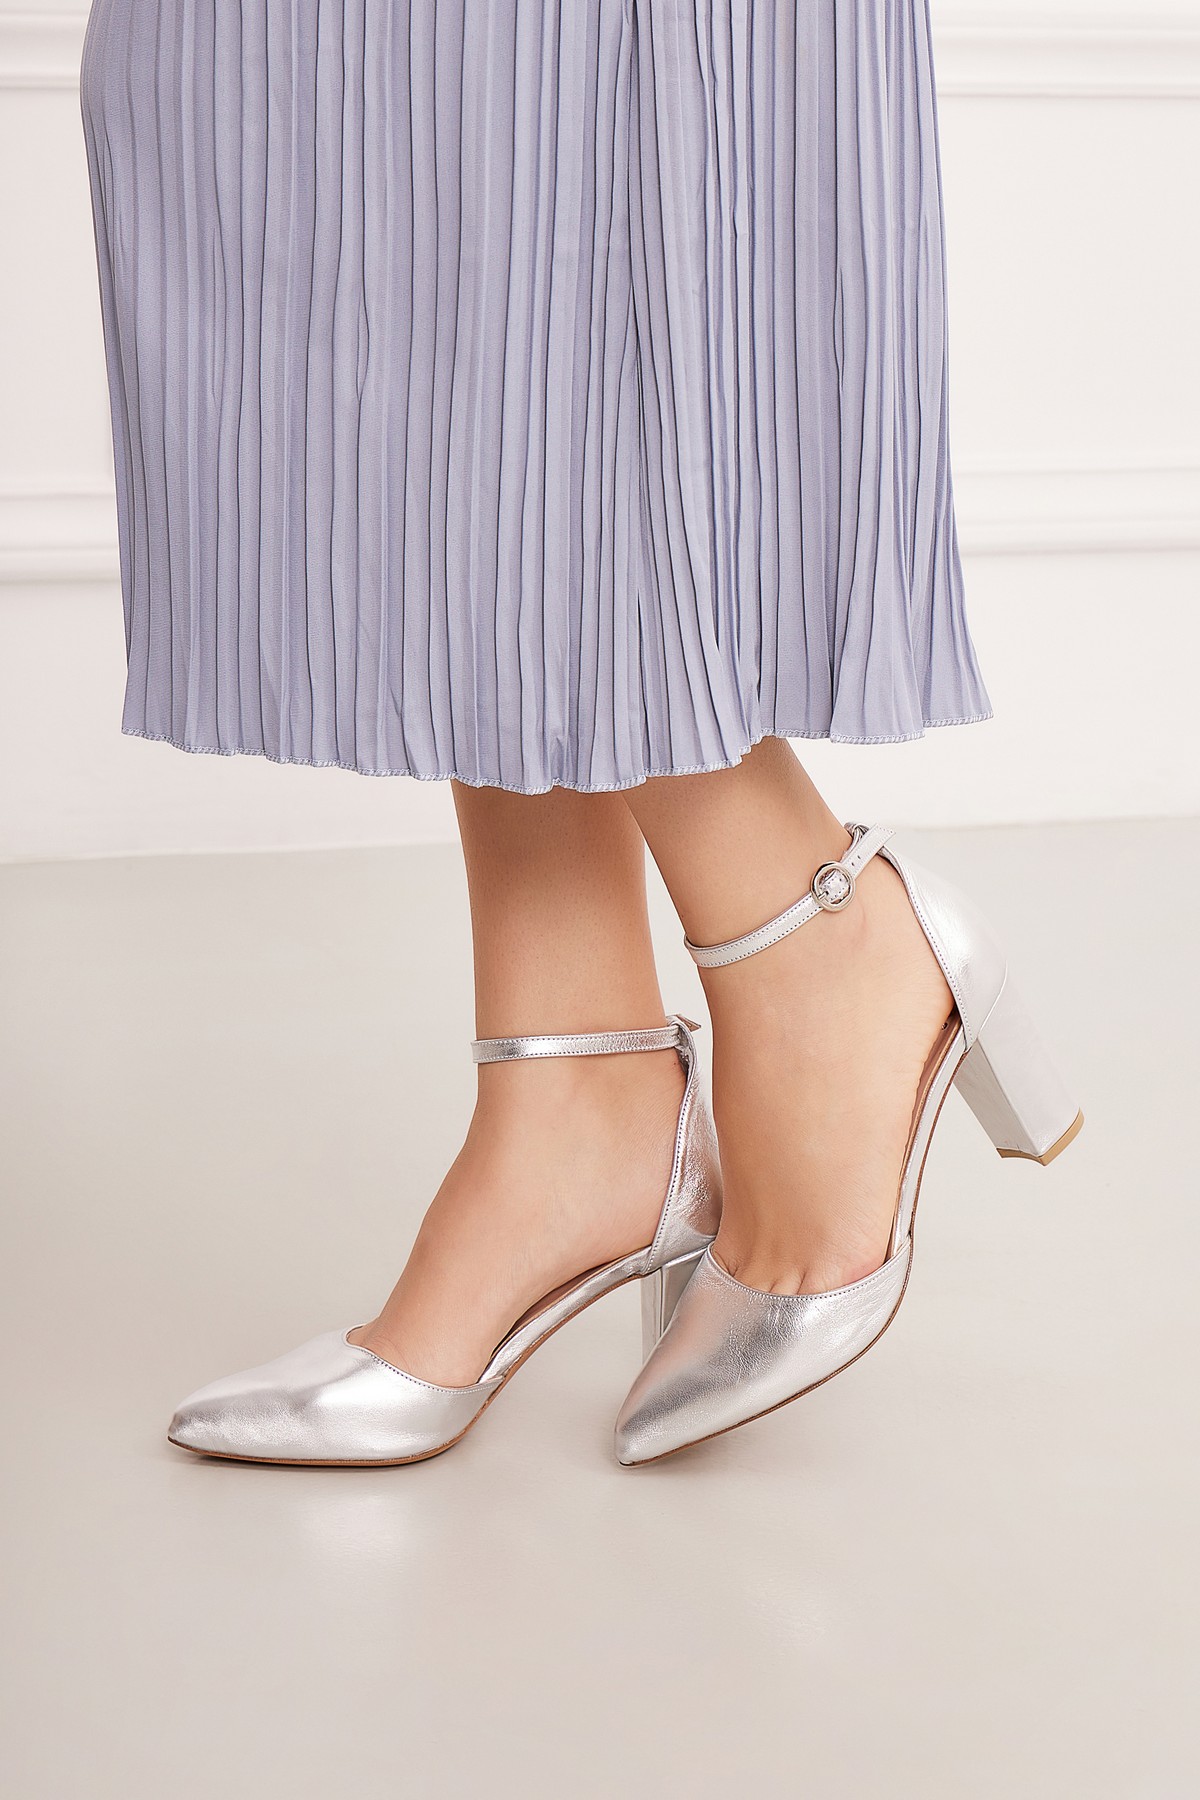 Silver block heels